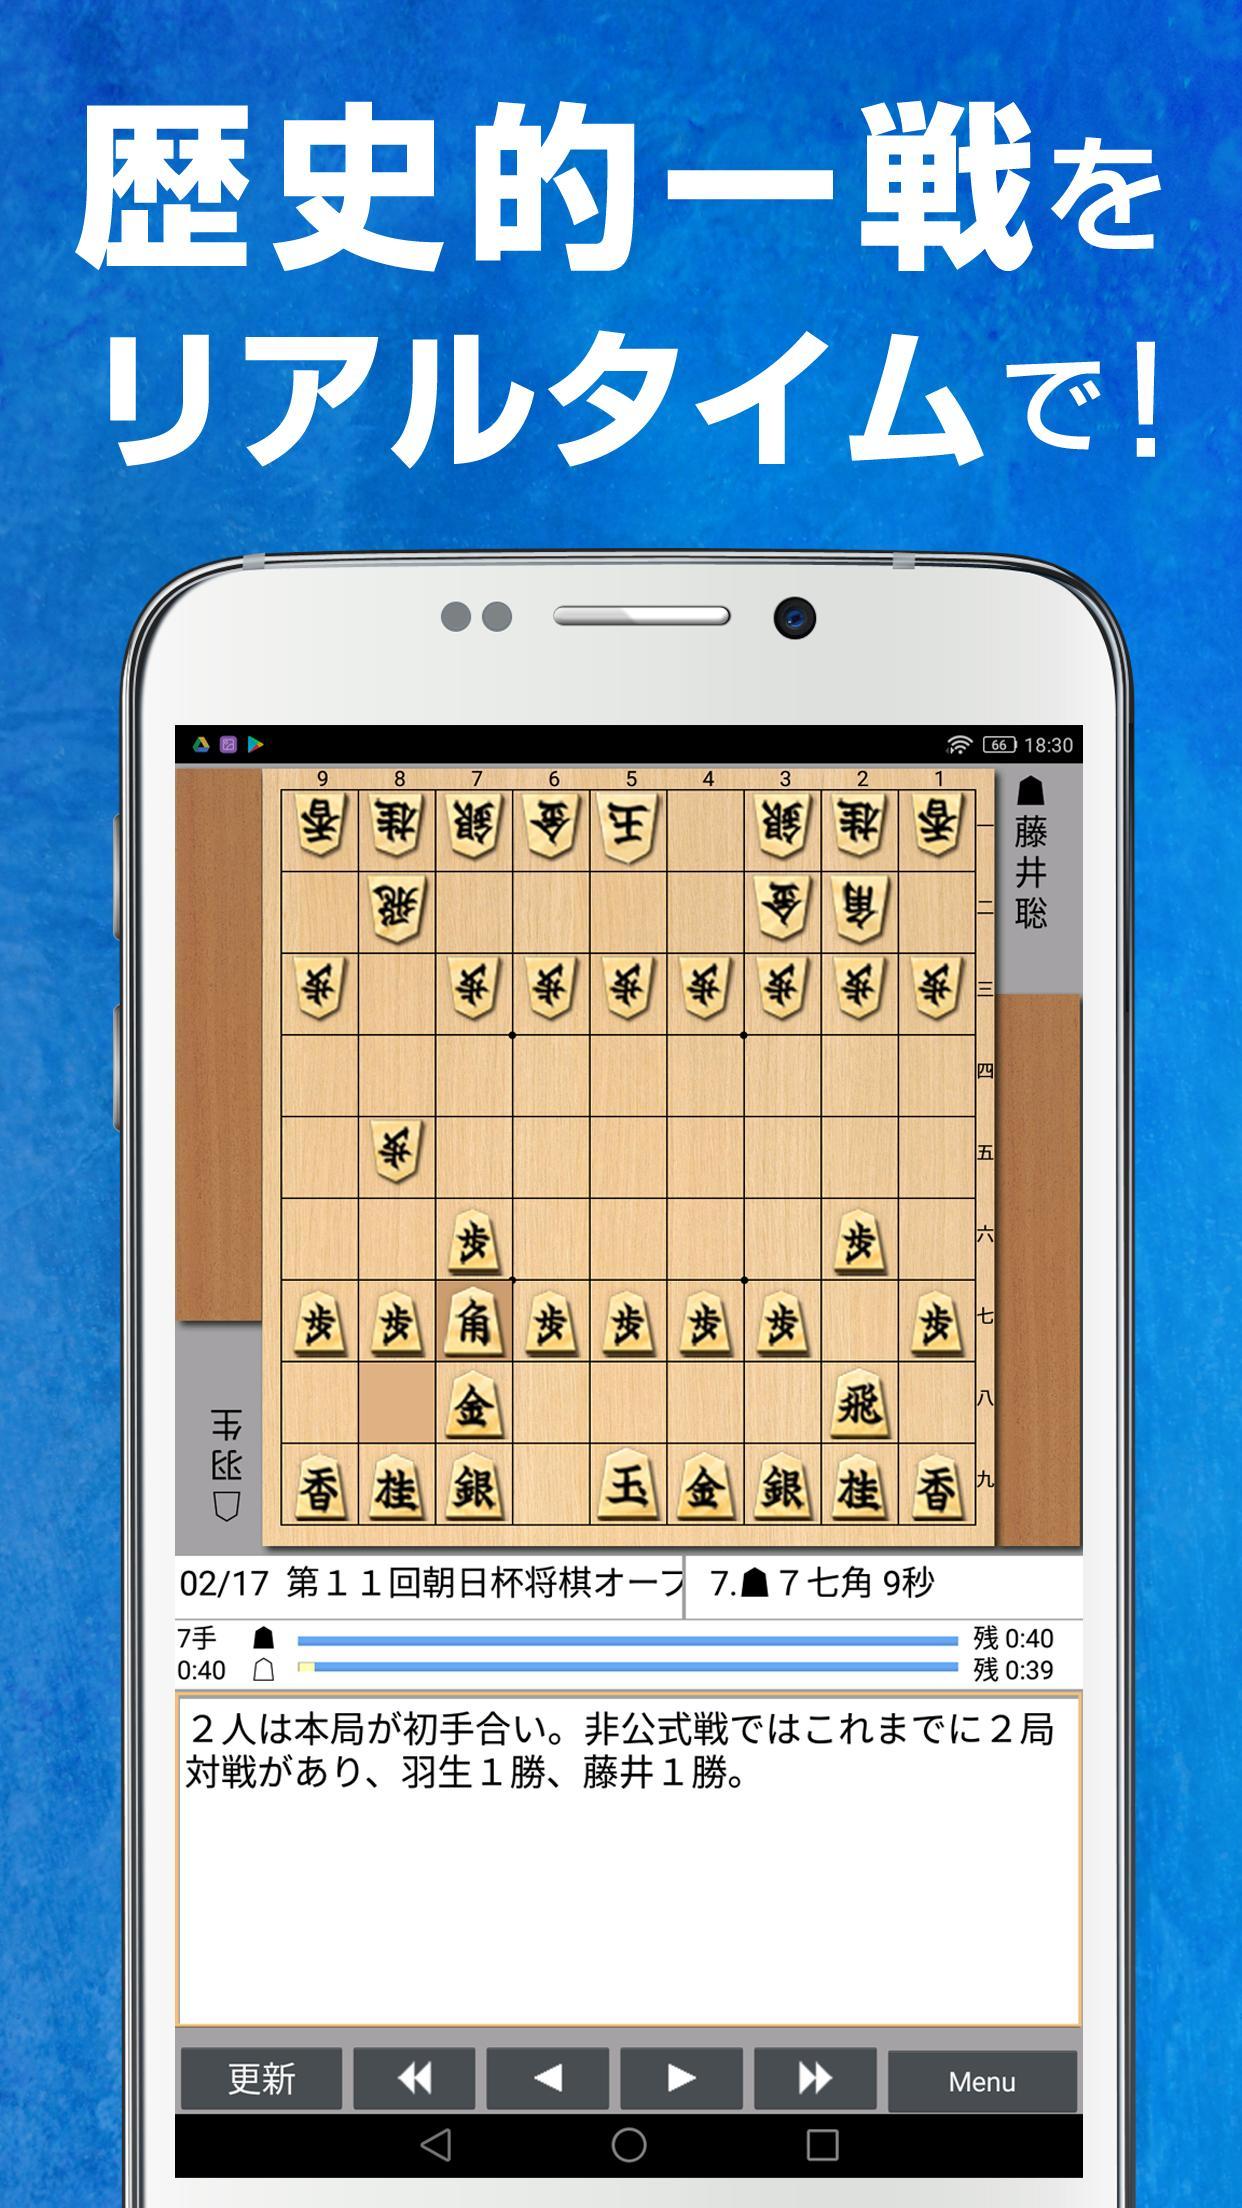 Shogi Live Subscription 2014 7.17 Screenshot 2